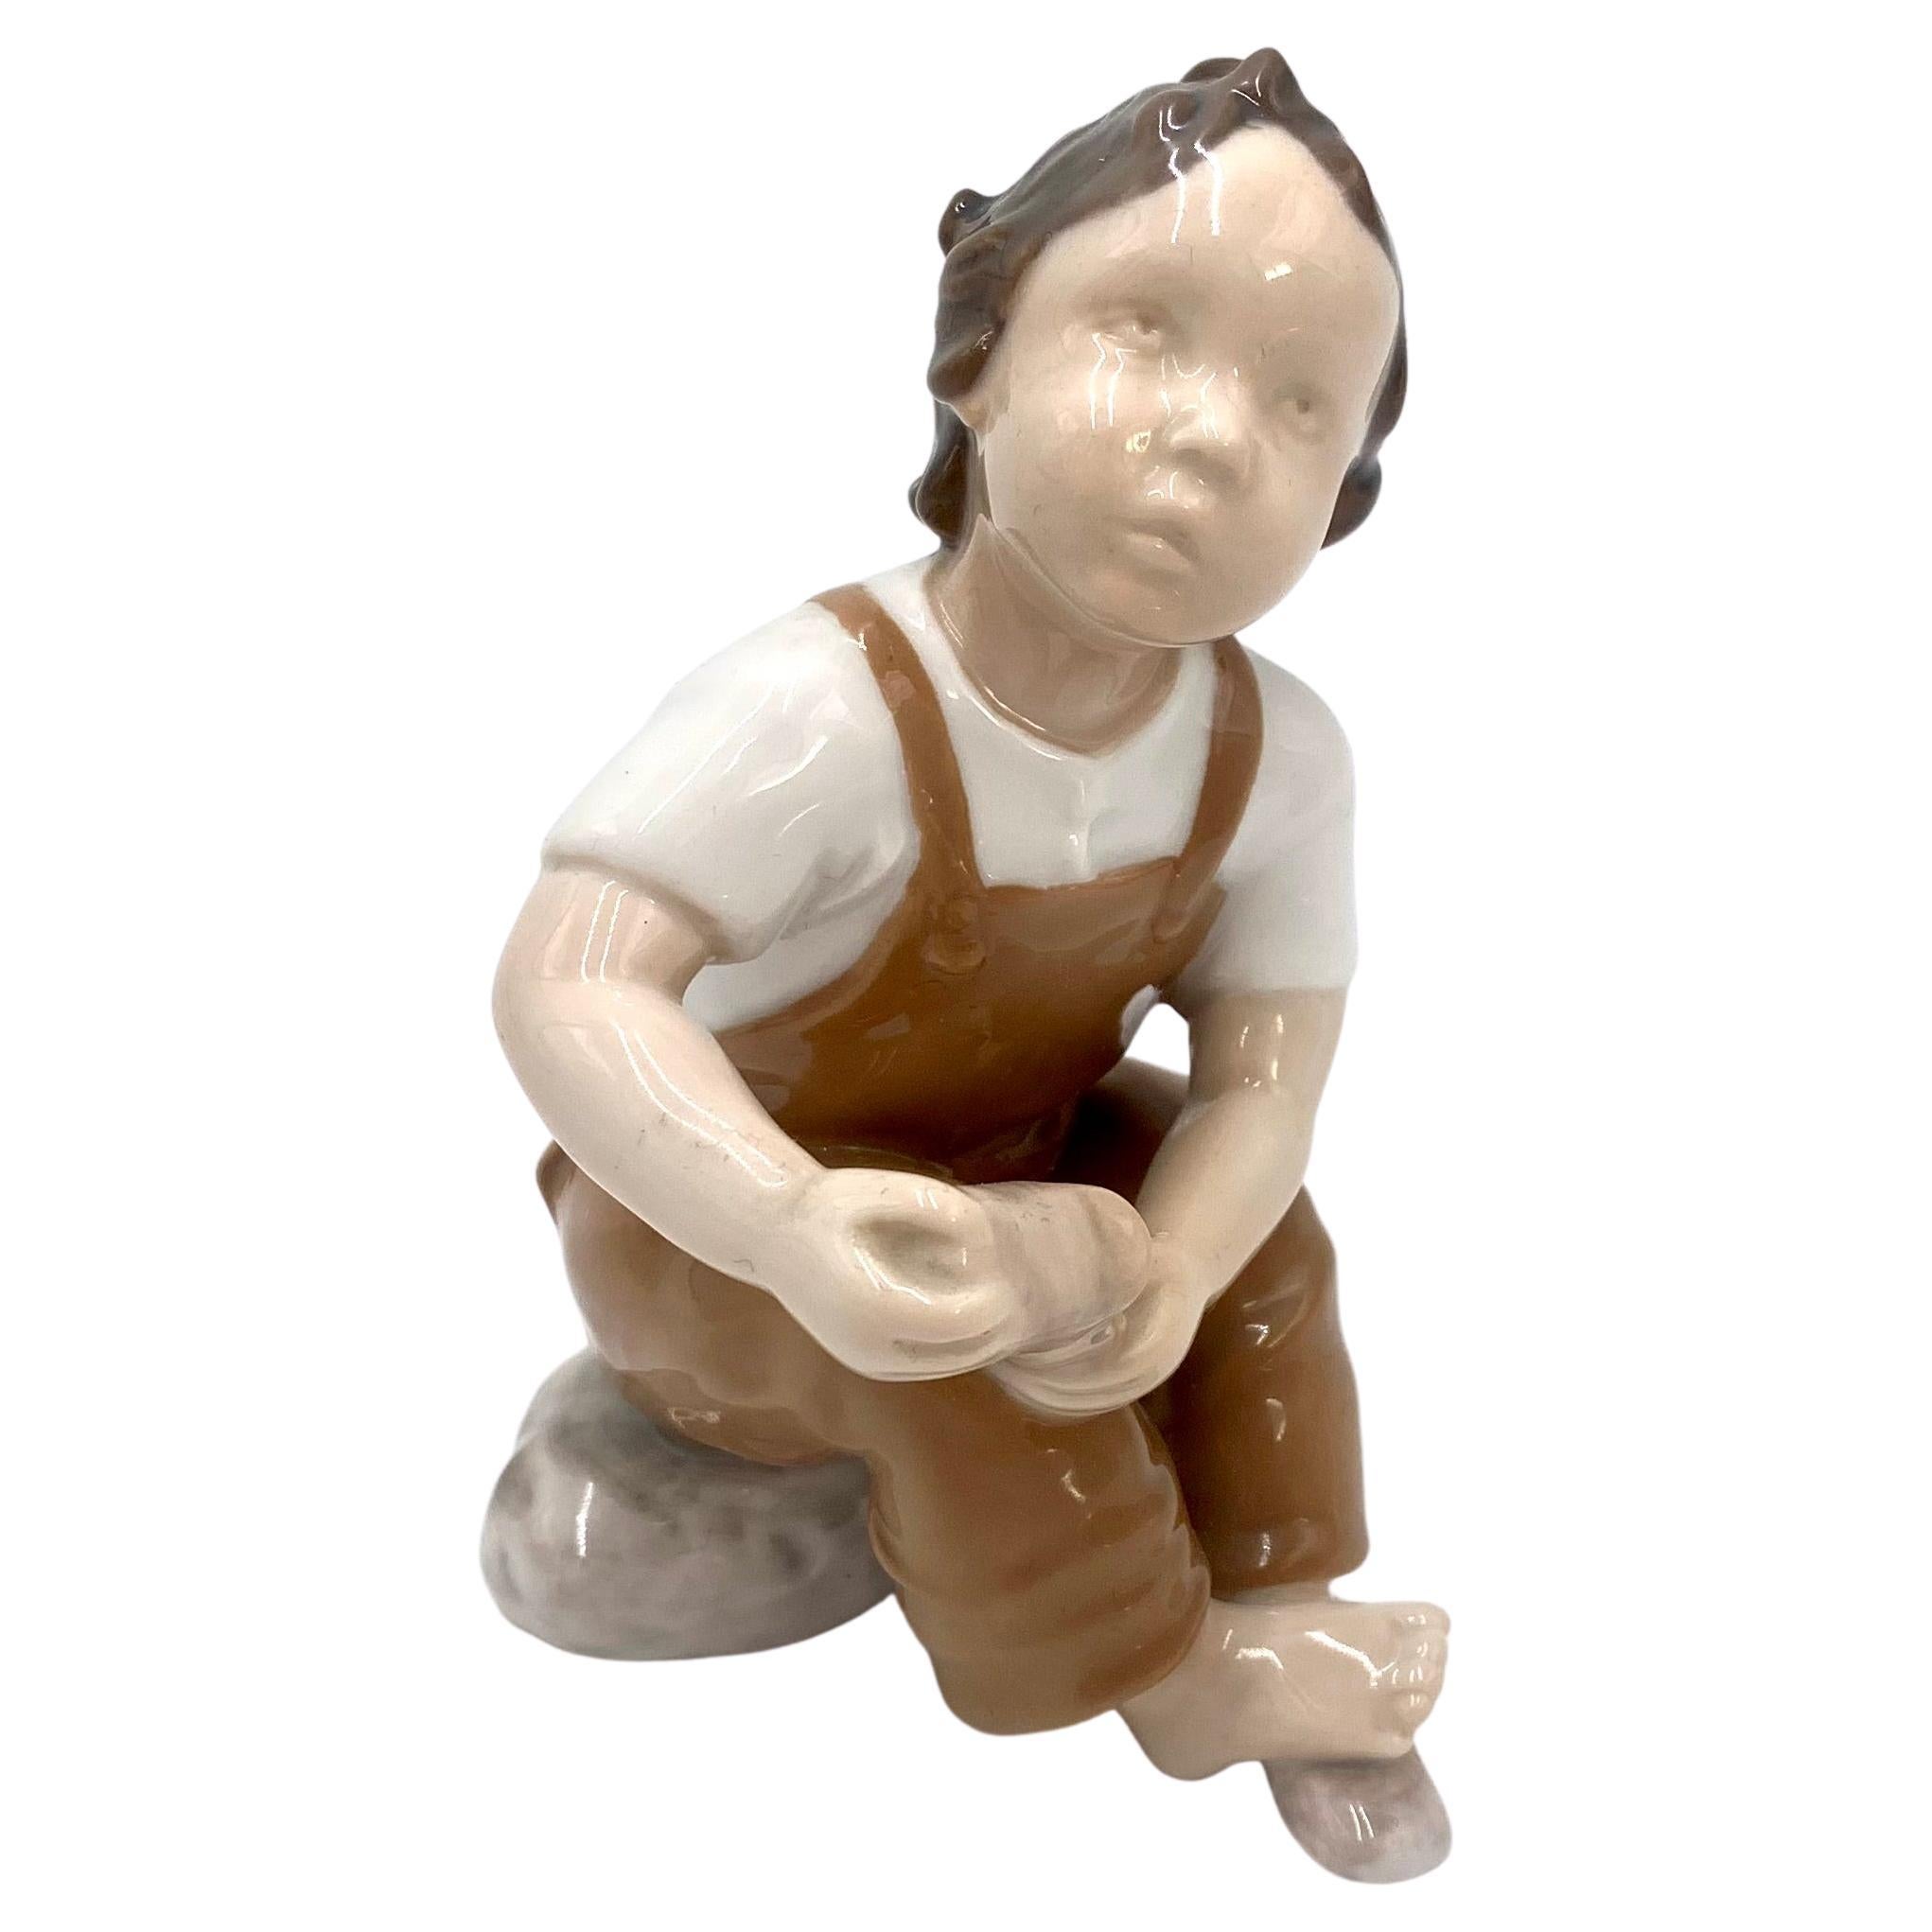 Porcelain Figurine of a Boy, Bing & Grondahl, Denmark, 1950s / 1960s For Sale